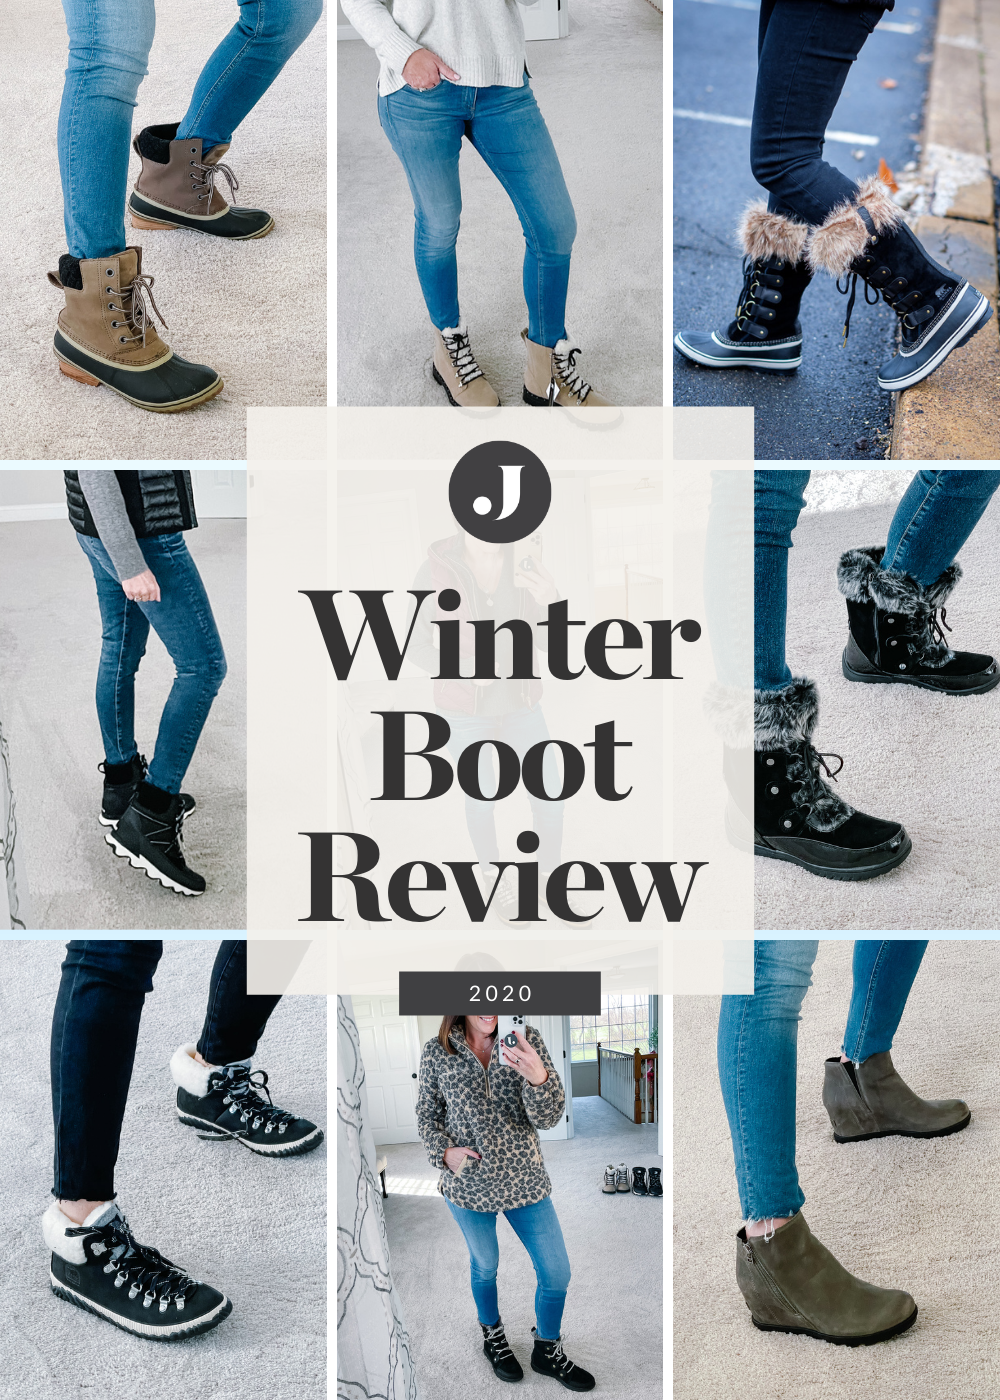 Winter Boot Review & Comparison